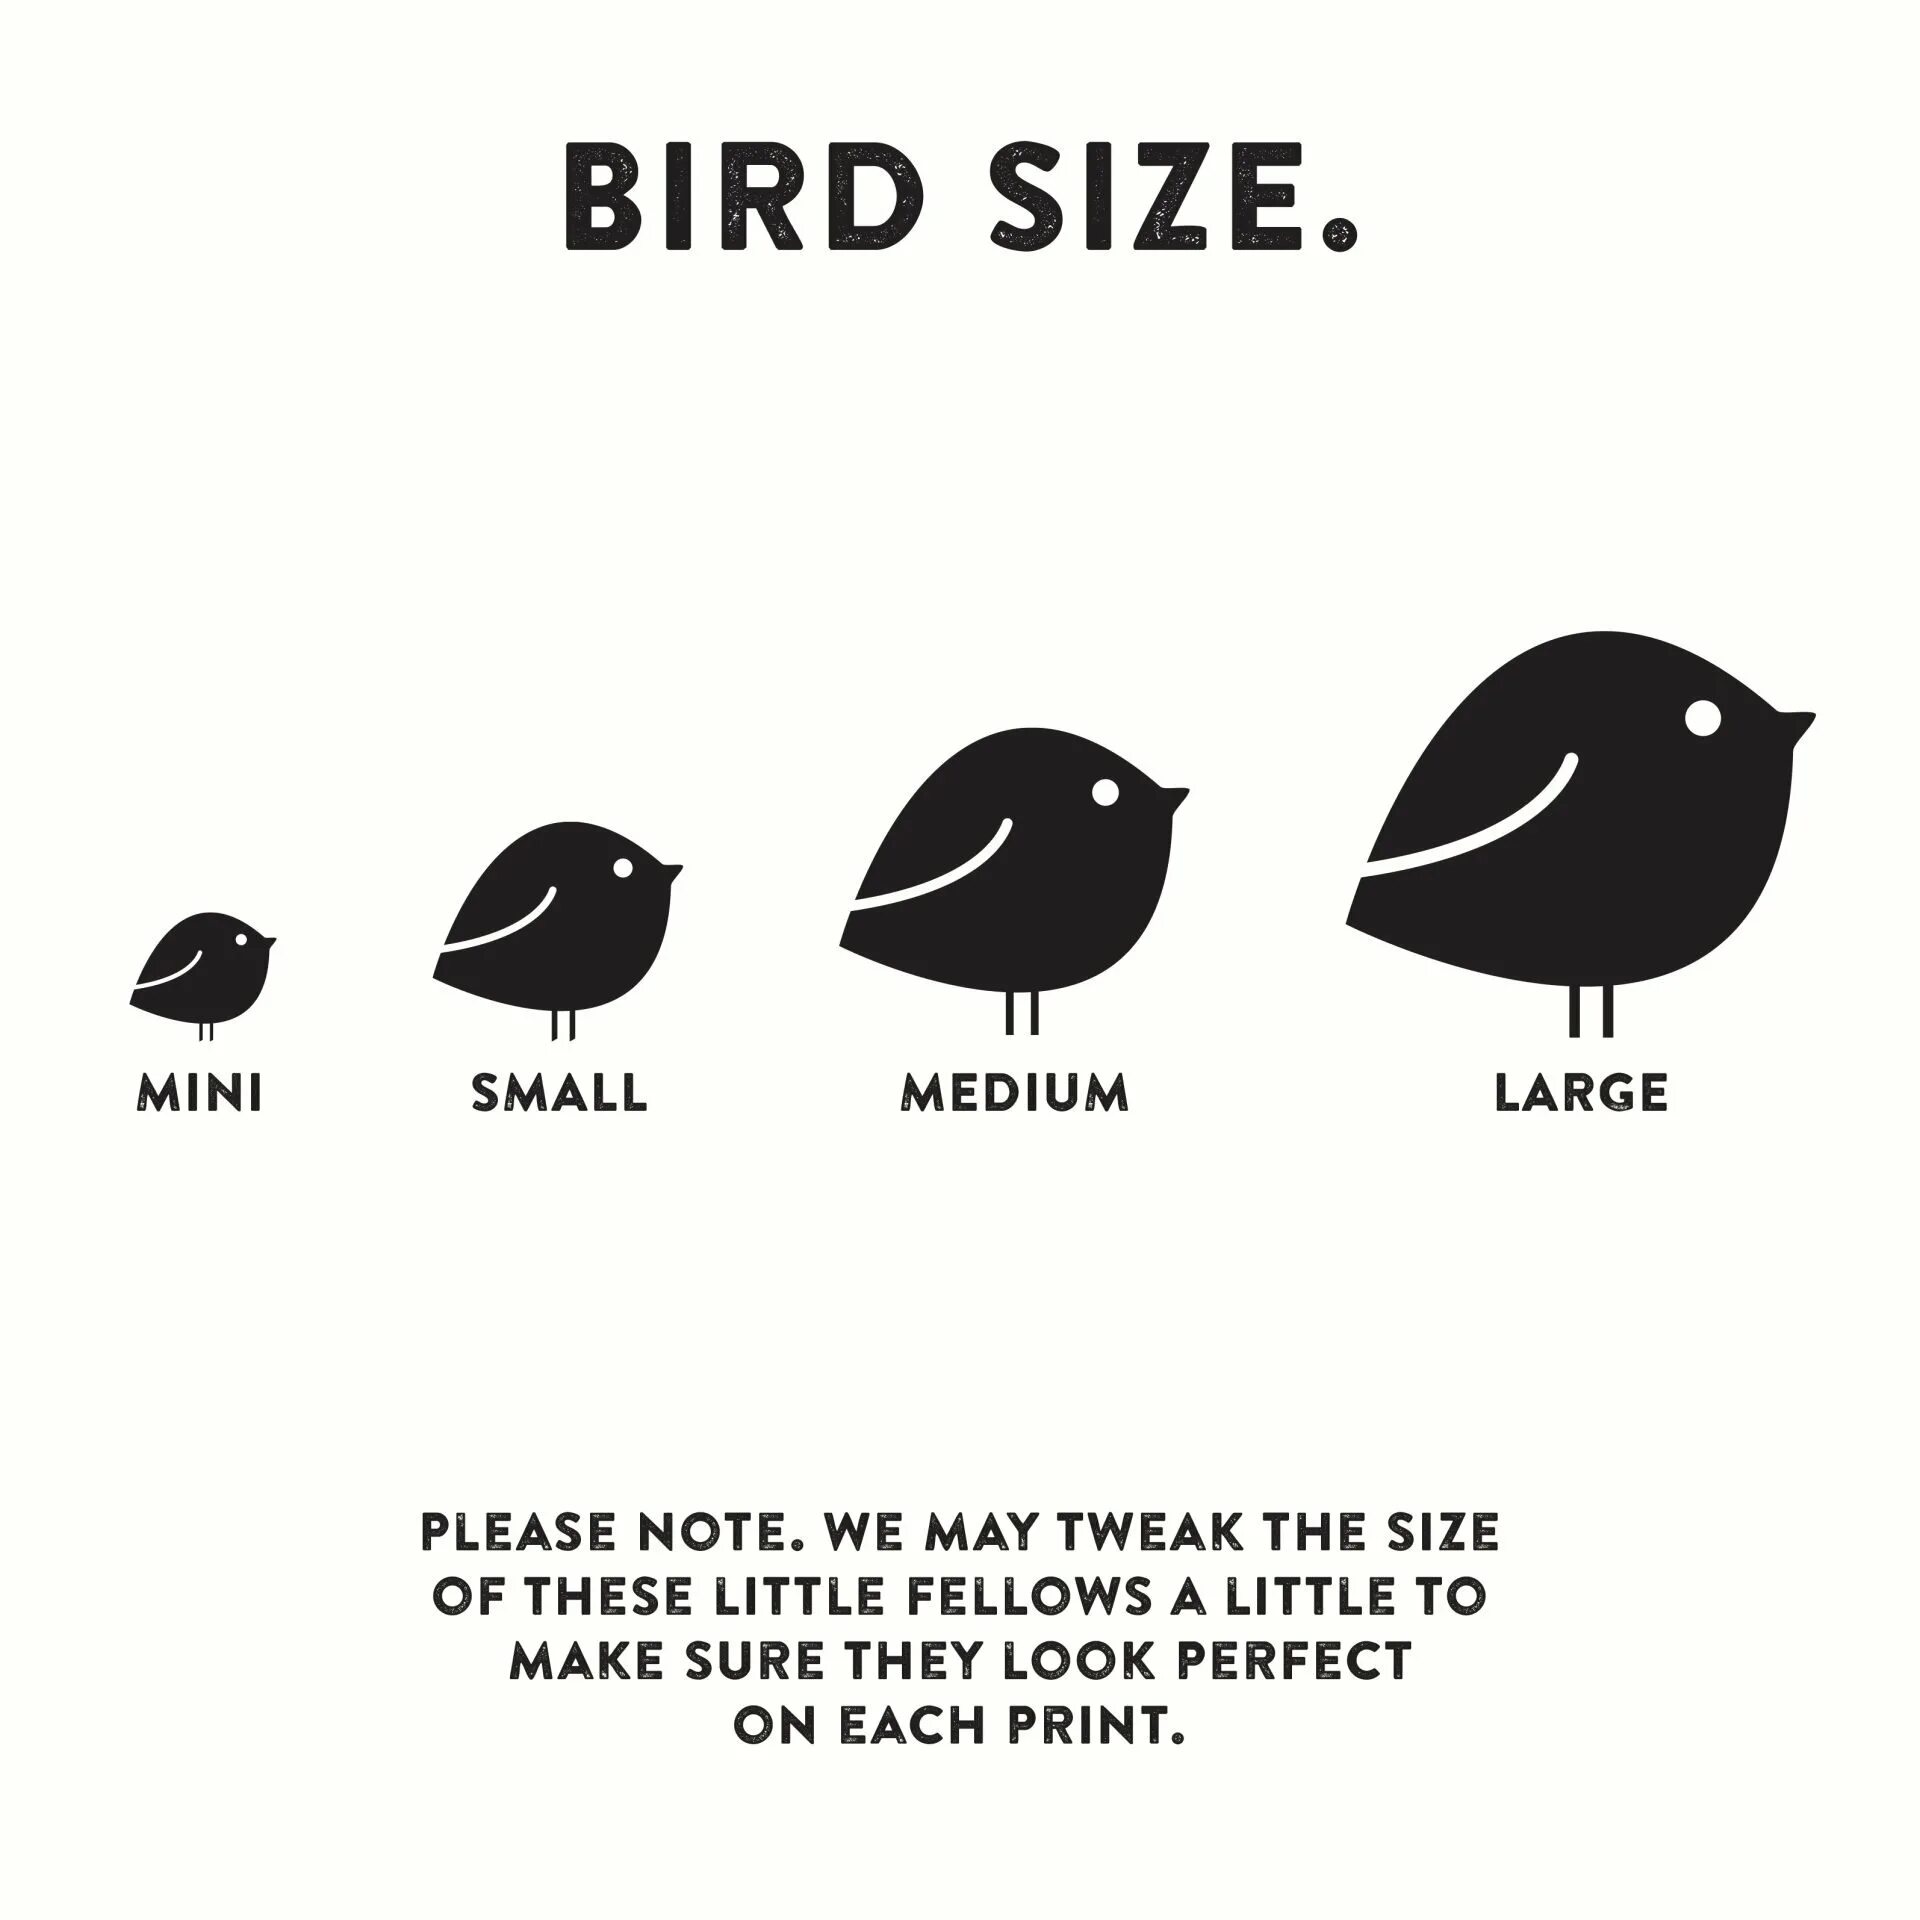 They like birds. Размеры птиц. Birds Size Comparison. Размер средней птицы. Bird Family.